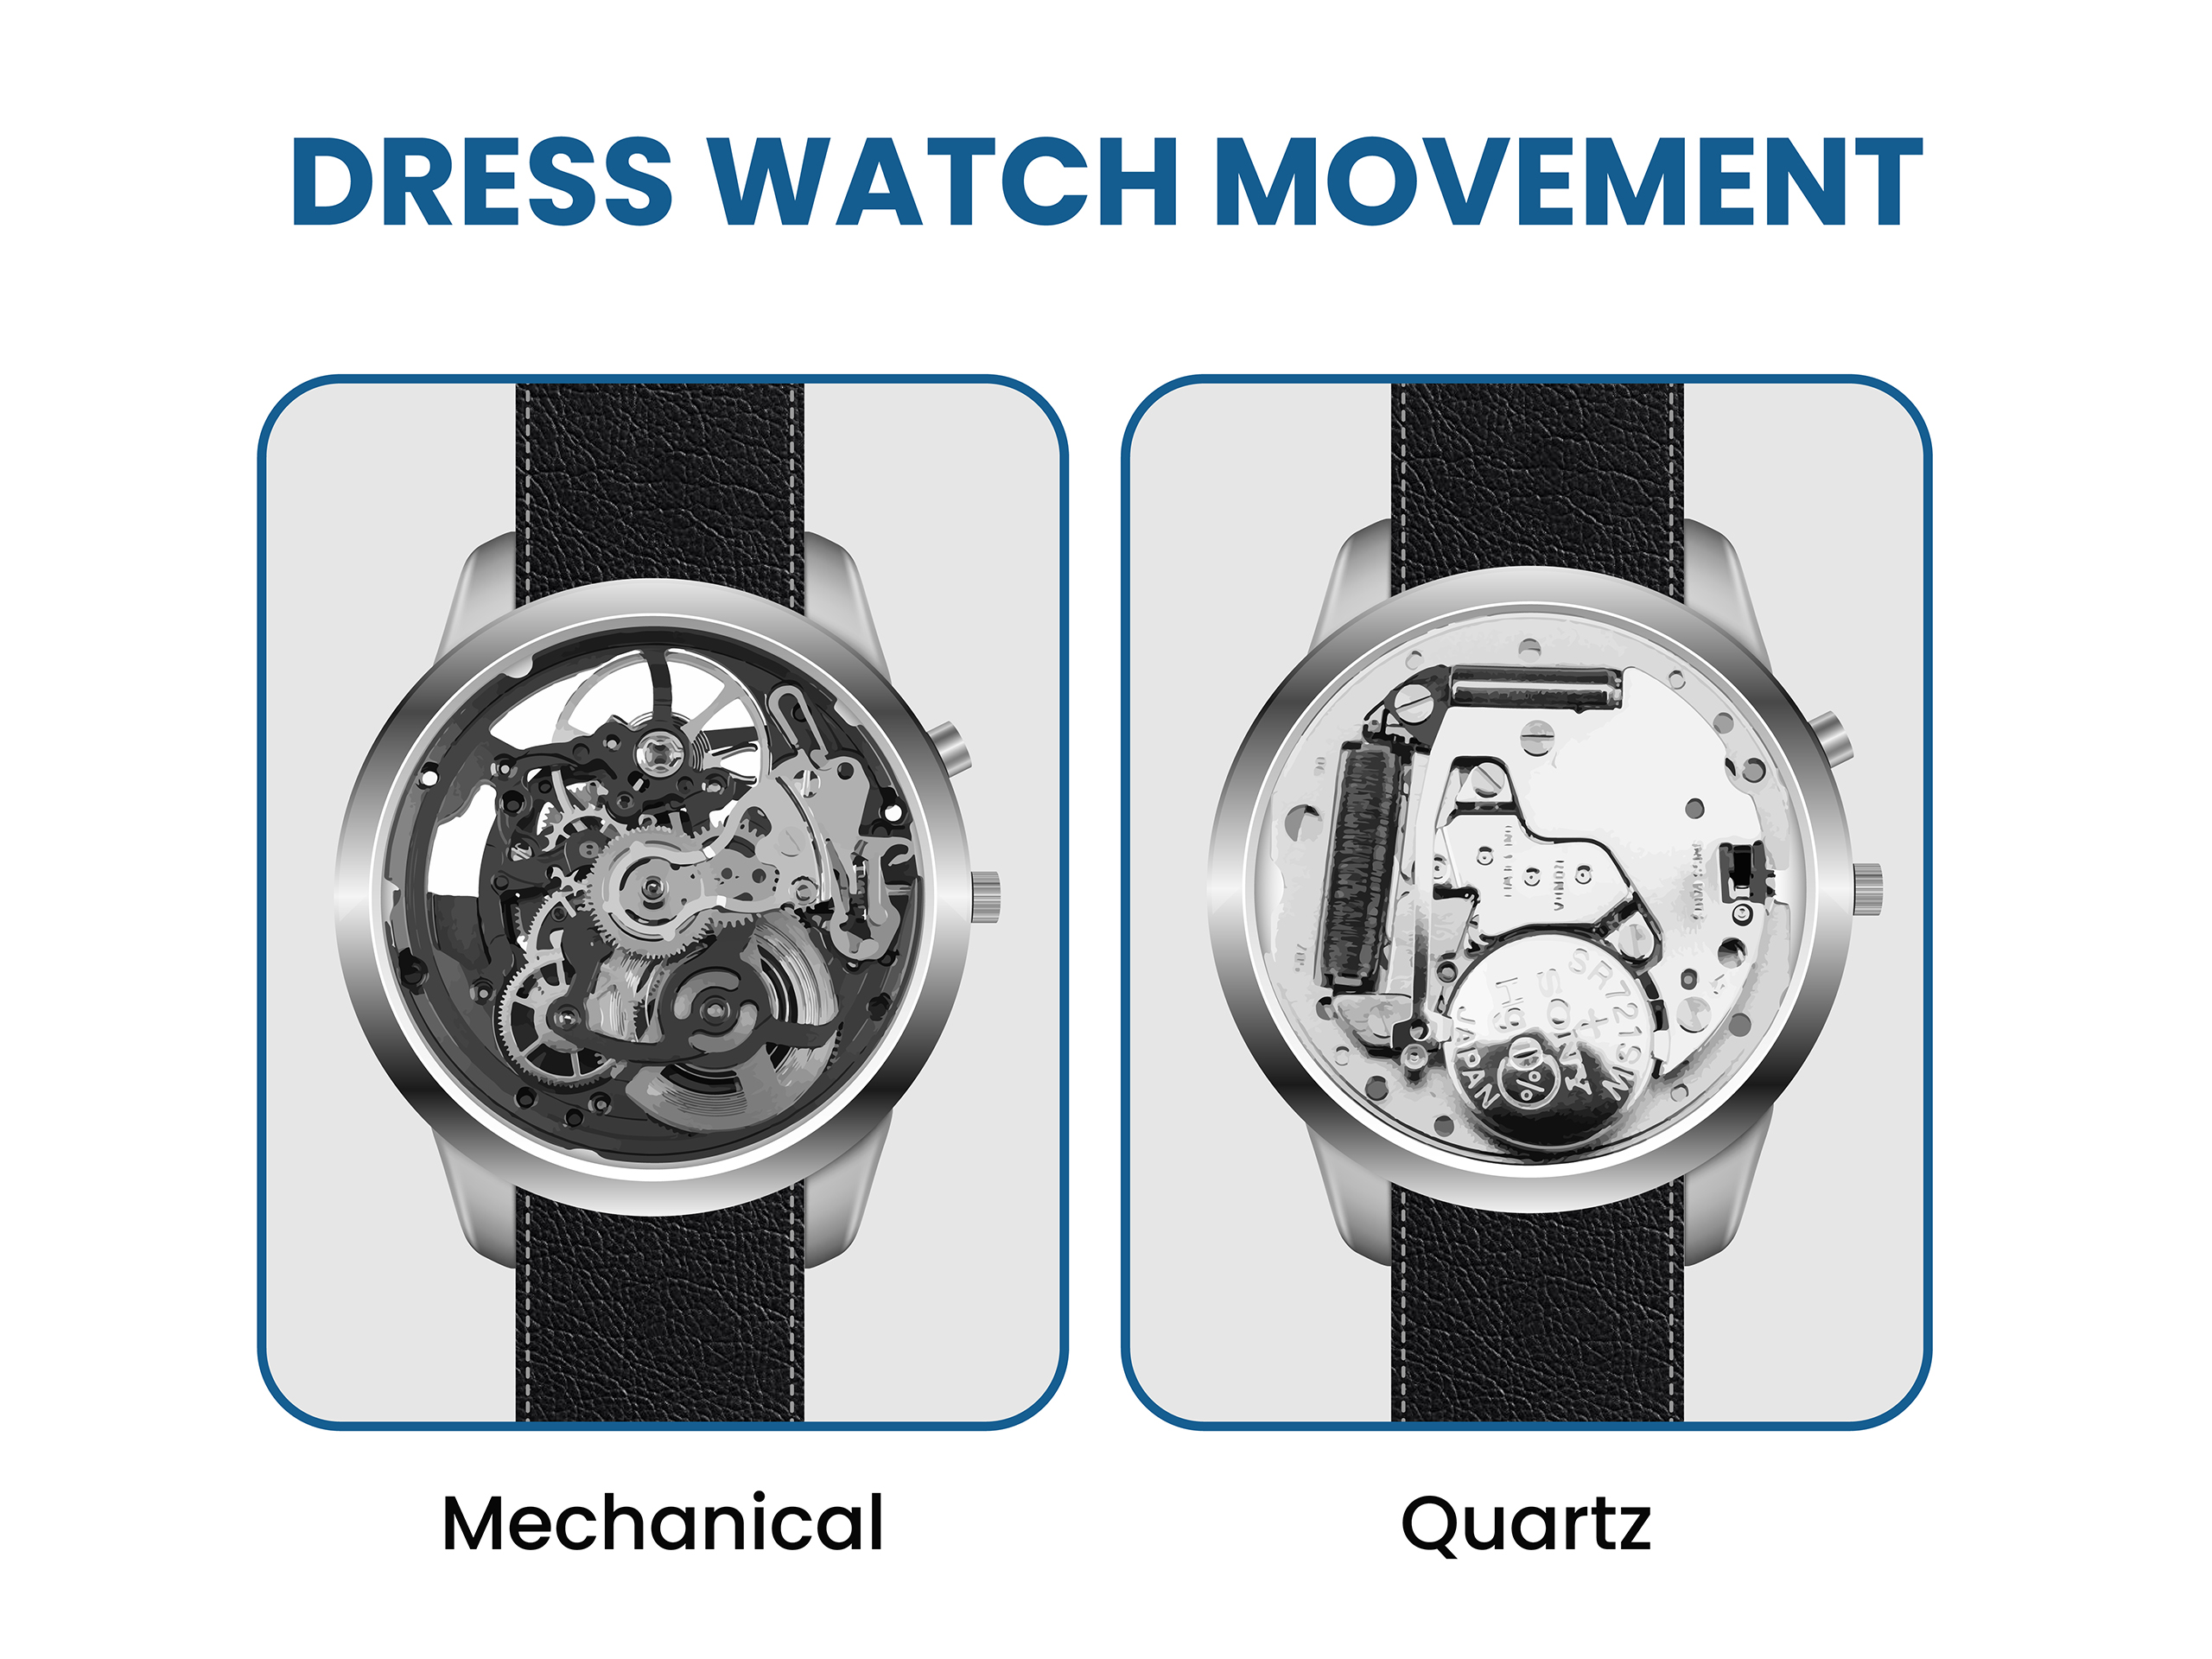 different types of watch movement: mechanical vs. quartz